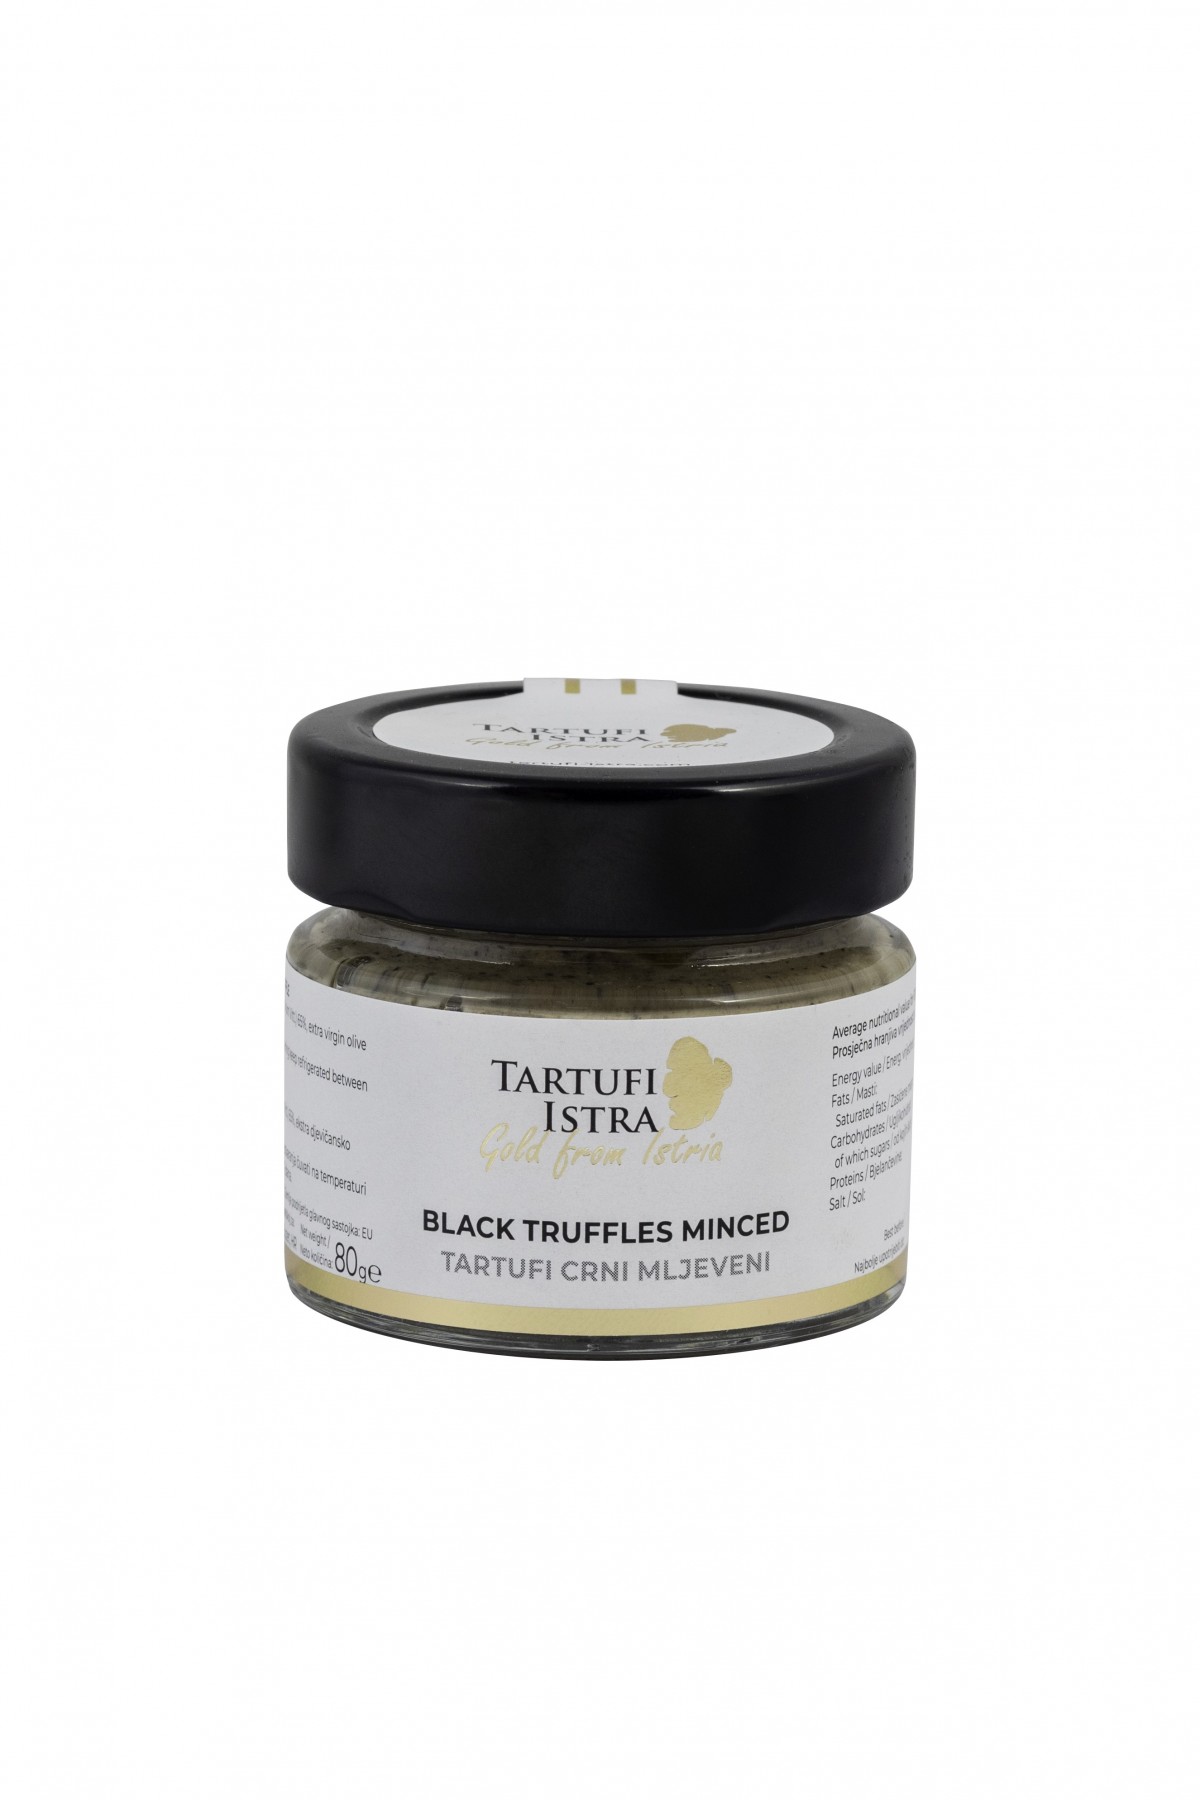 Black truffle minced, Tartufi Istra